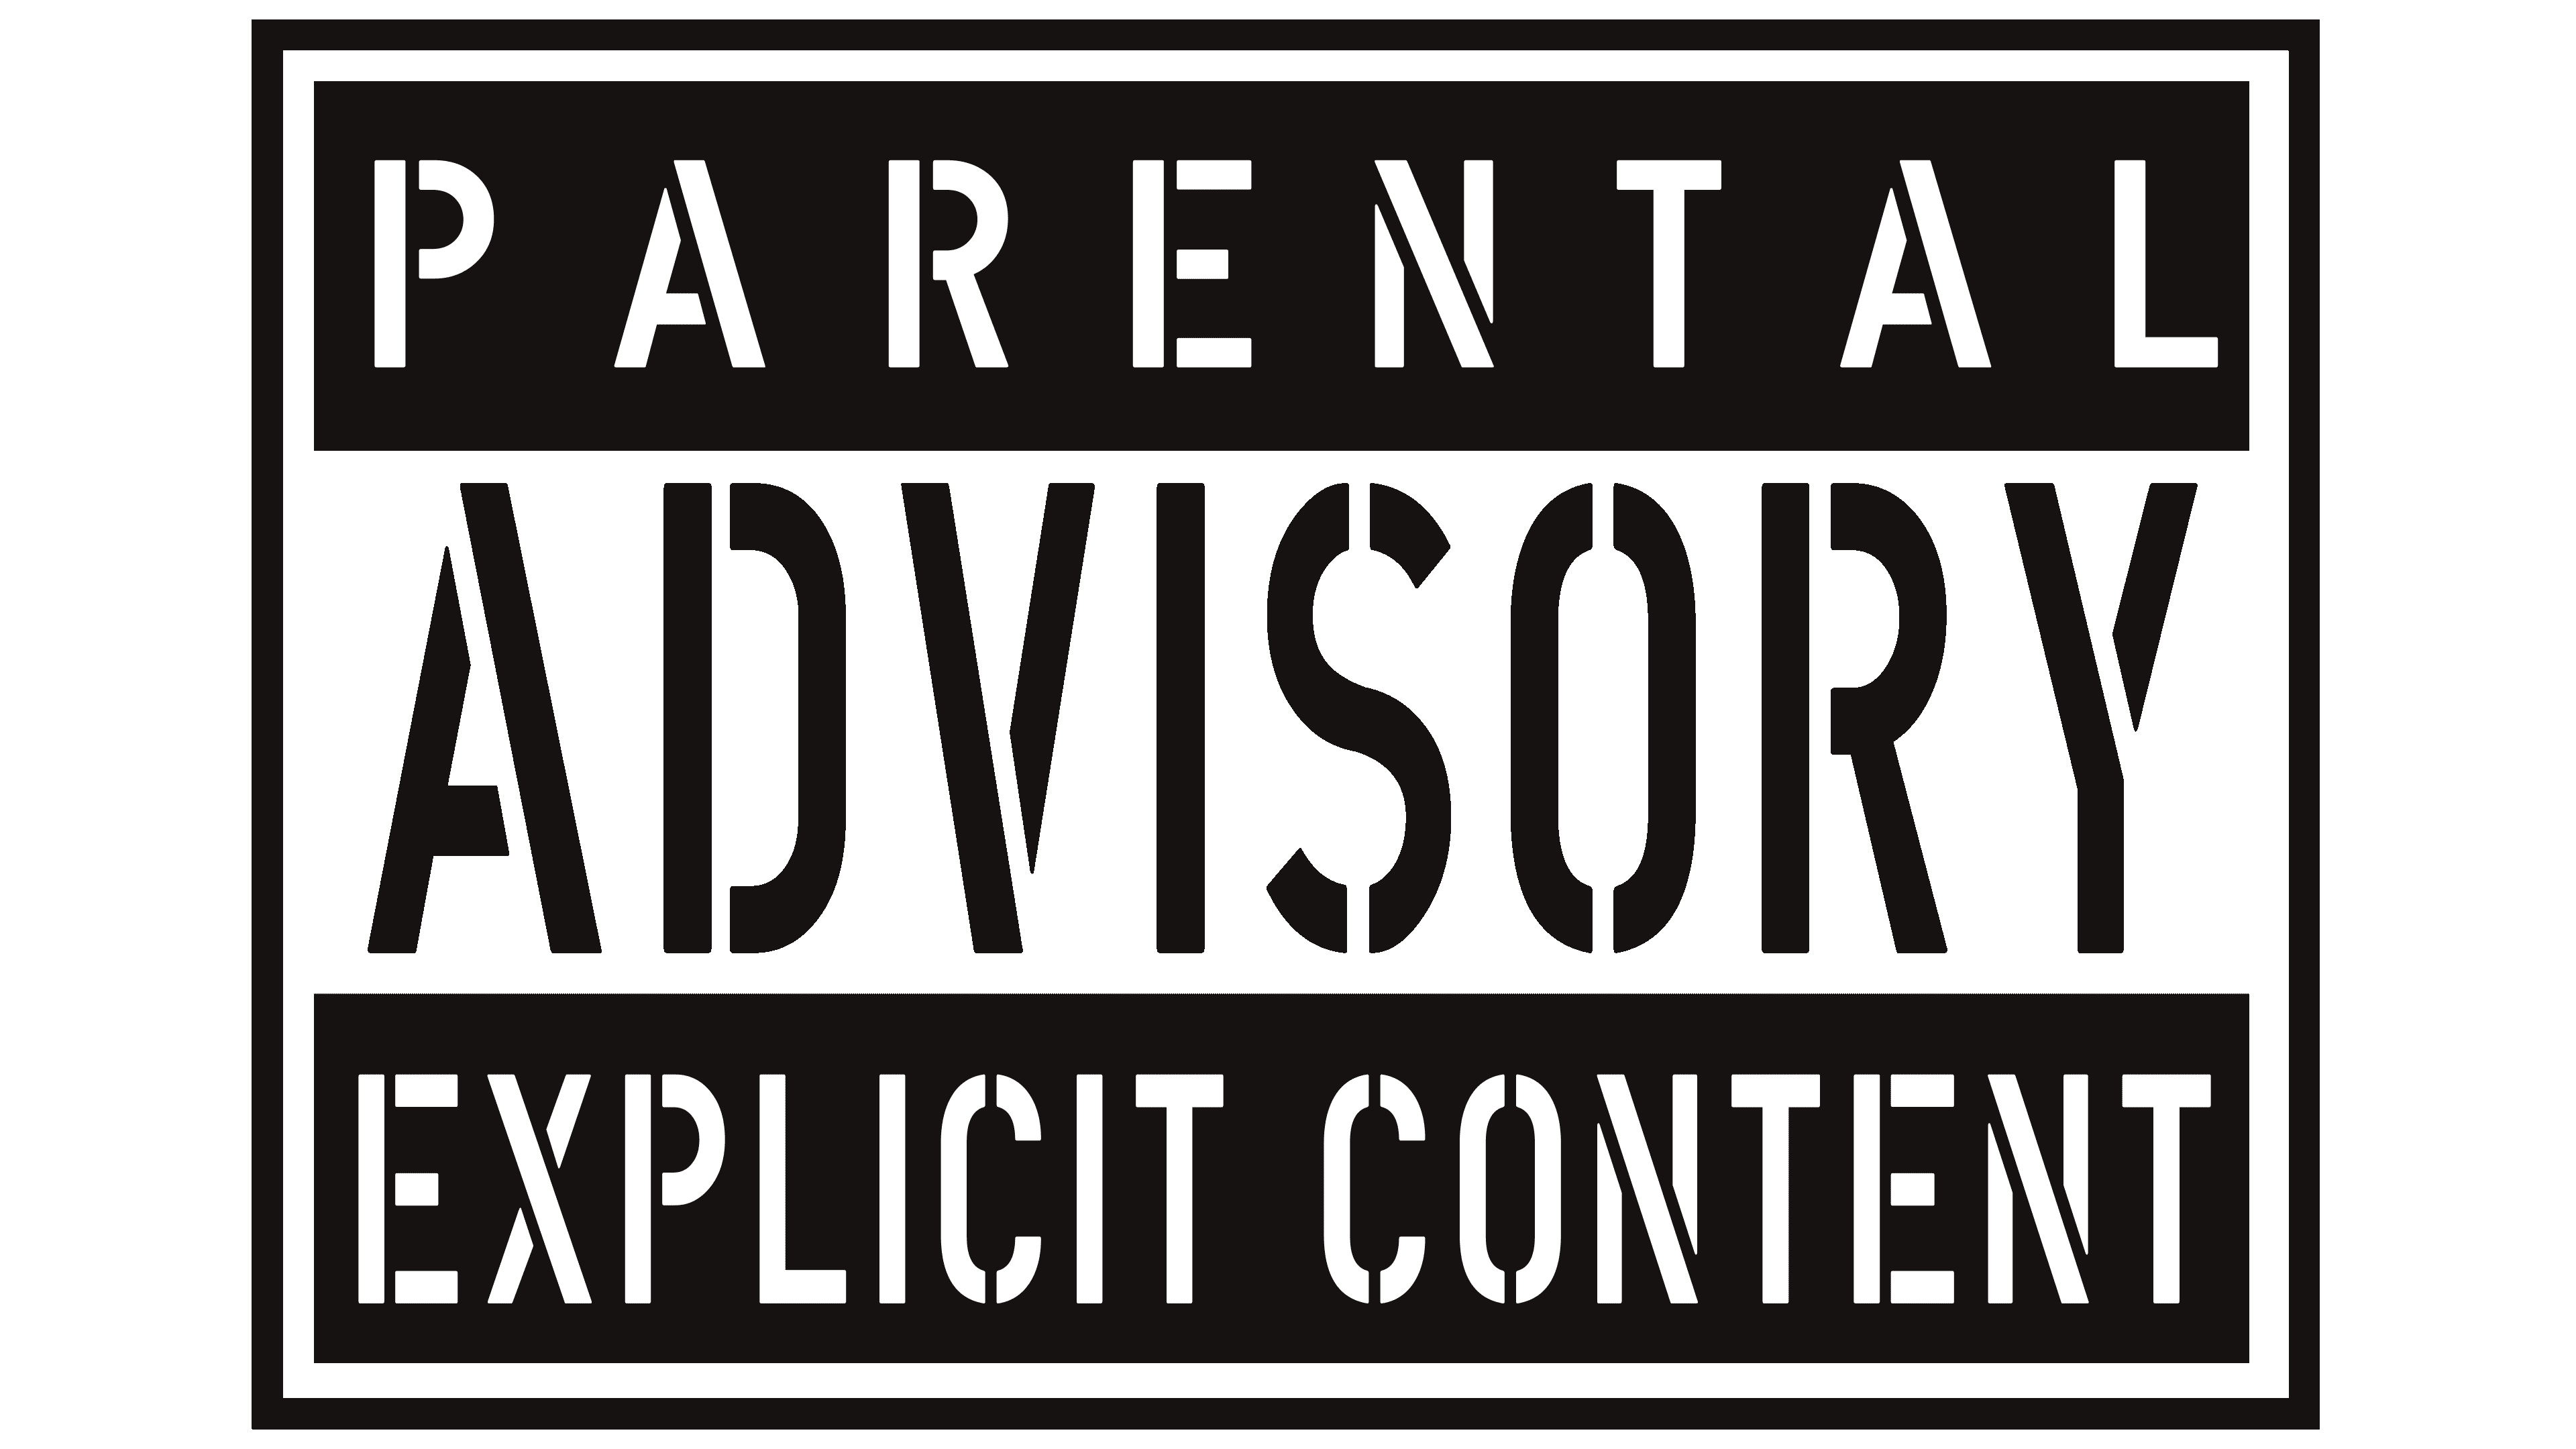 Parental advisory content png. Значок Advisory. Parental Advisory шрифт. Значок parental Advisory. Значок Explicit content.